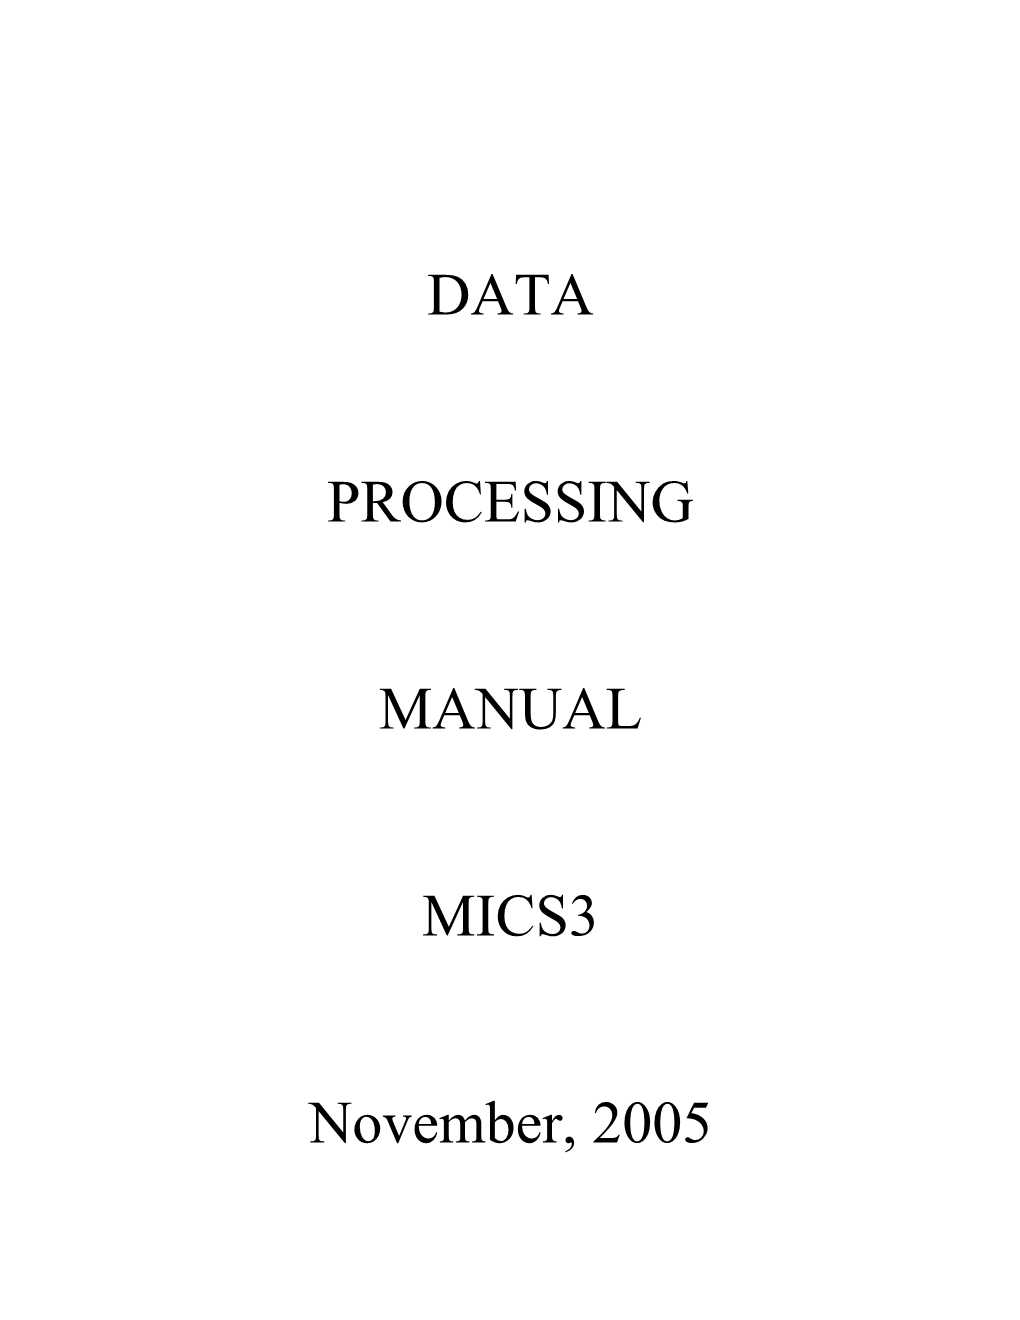 DATA PROCESSING MANUAL MICS3 November, 2005